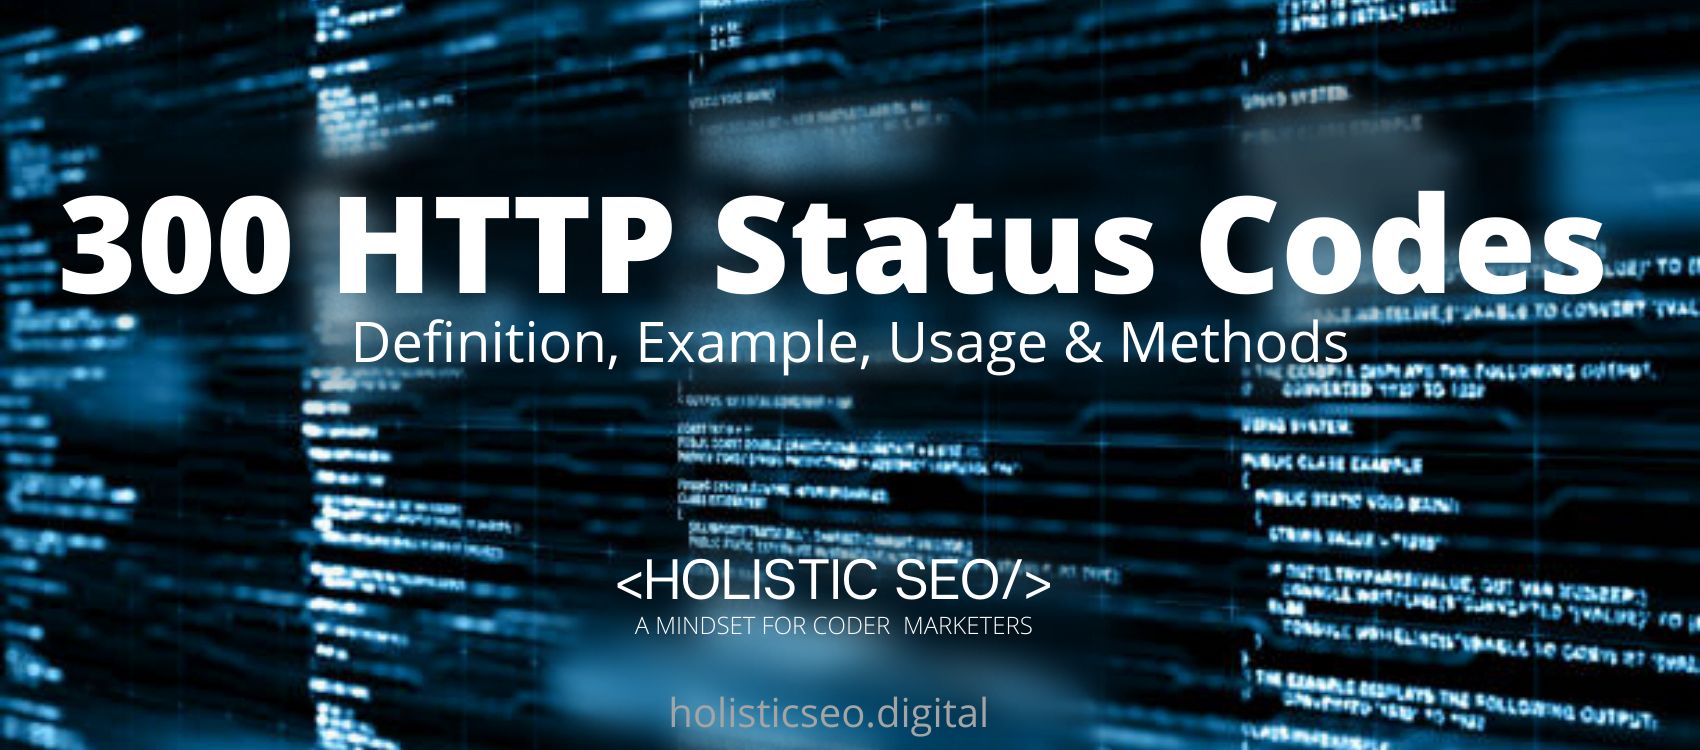 300 HTTP Status Codes